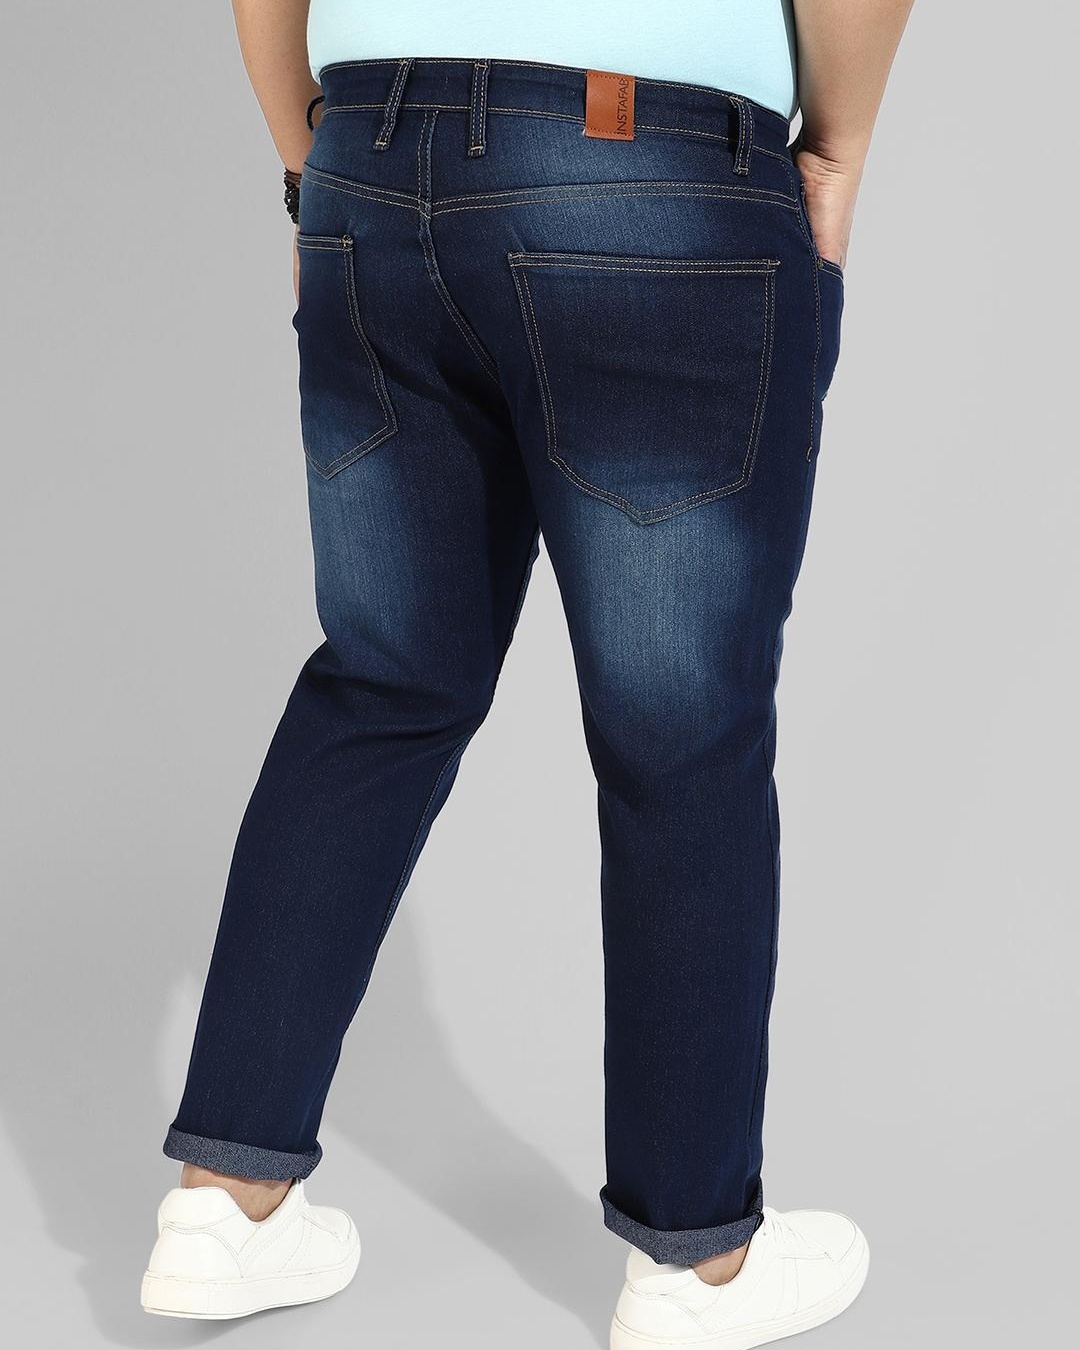 Shop Men's Blue Distressed Jeans-Back